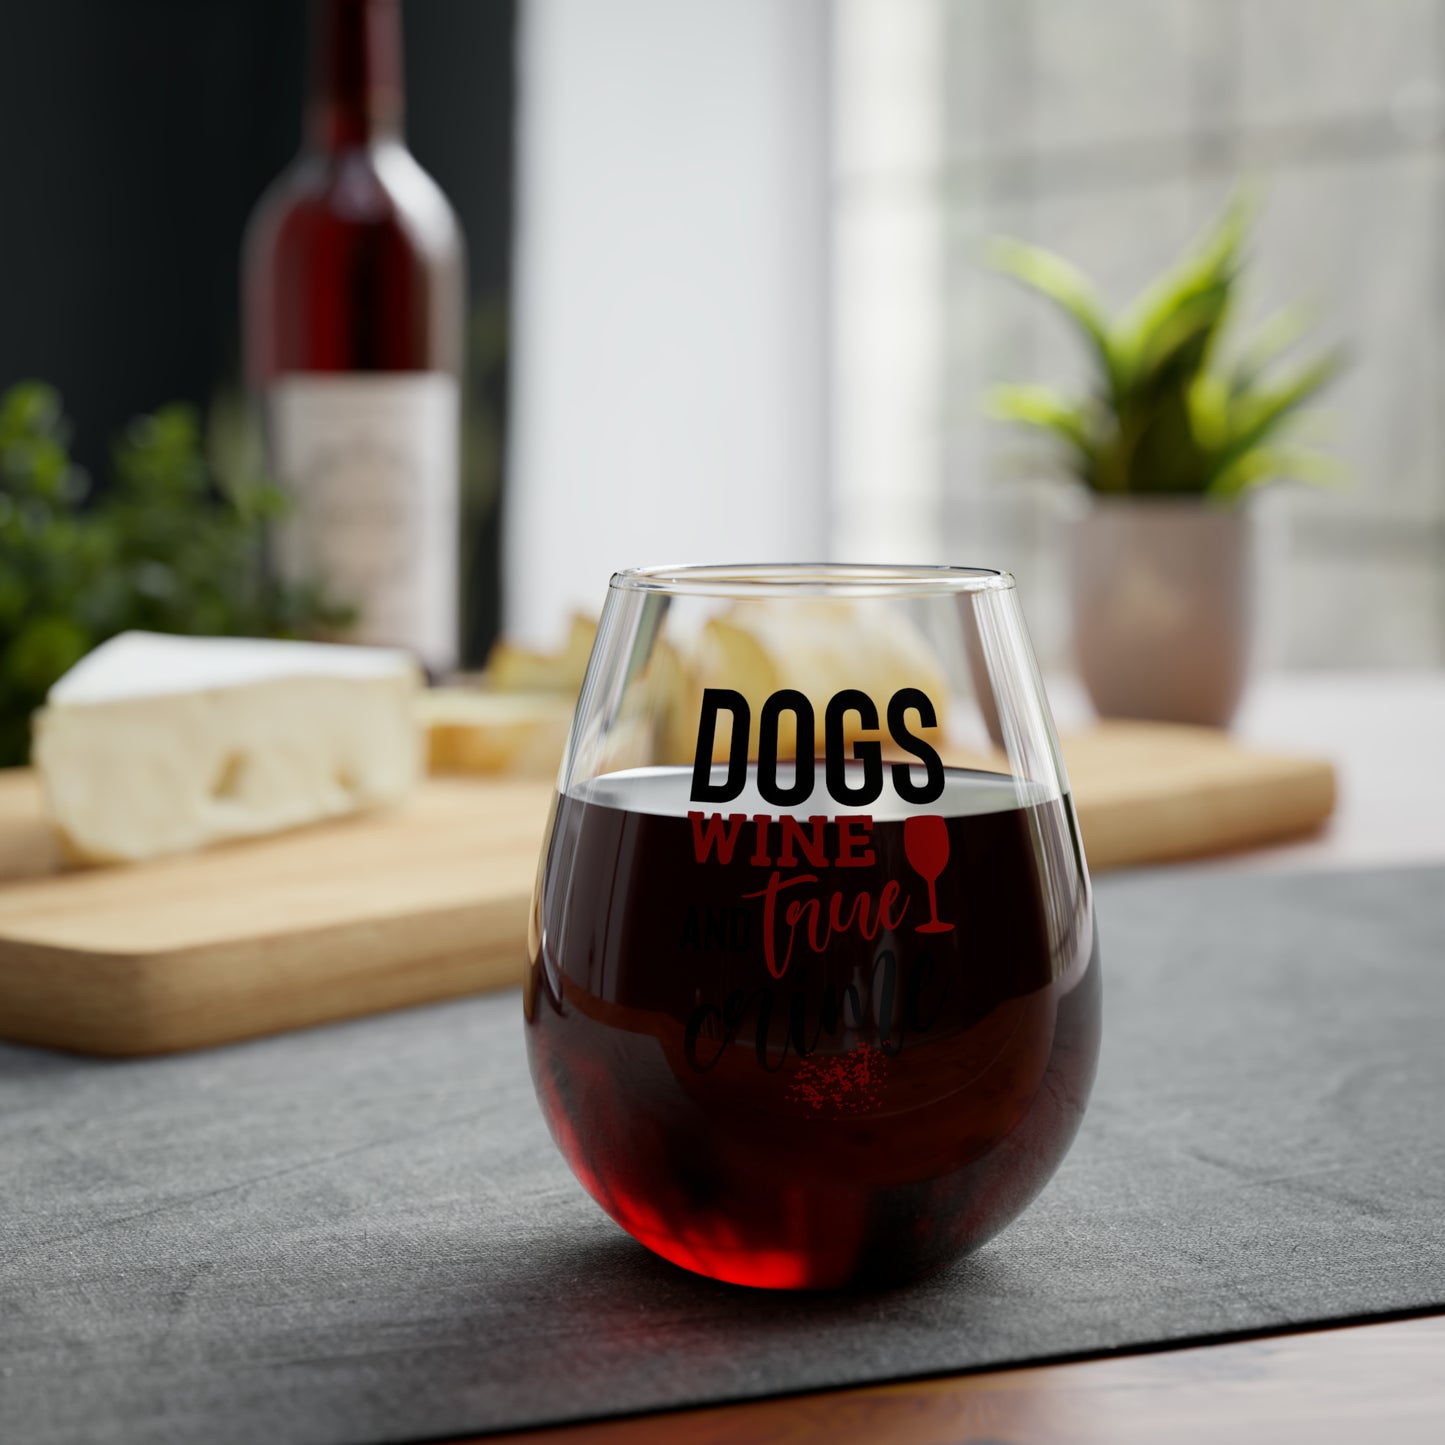 Dogs Wine and True Crime Stemless Wine Glass